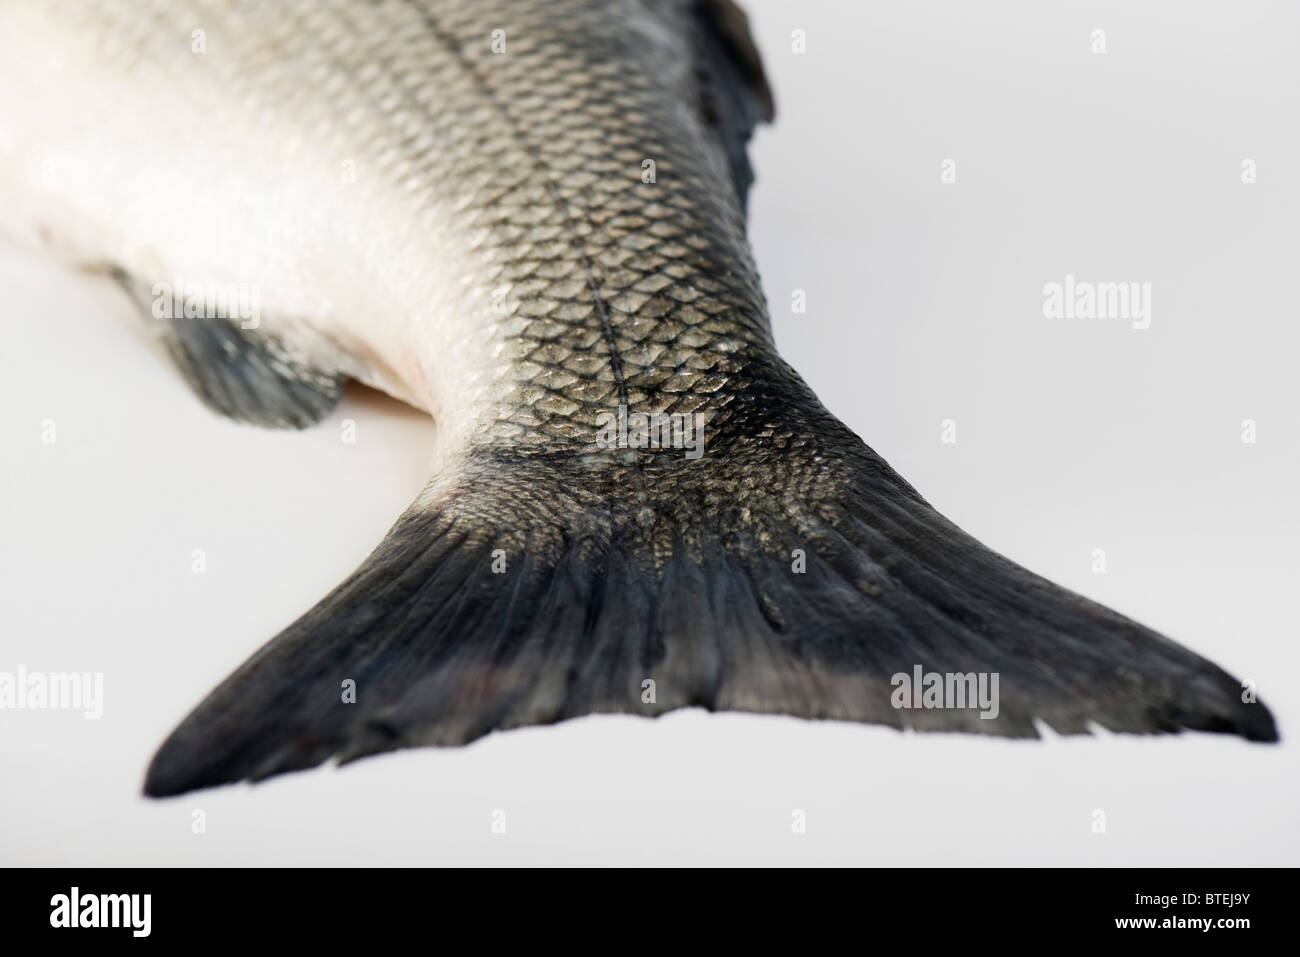 Raw fish, close-up of tail Stock Photo